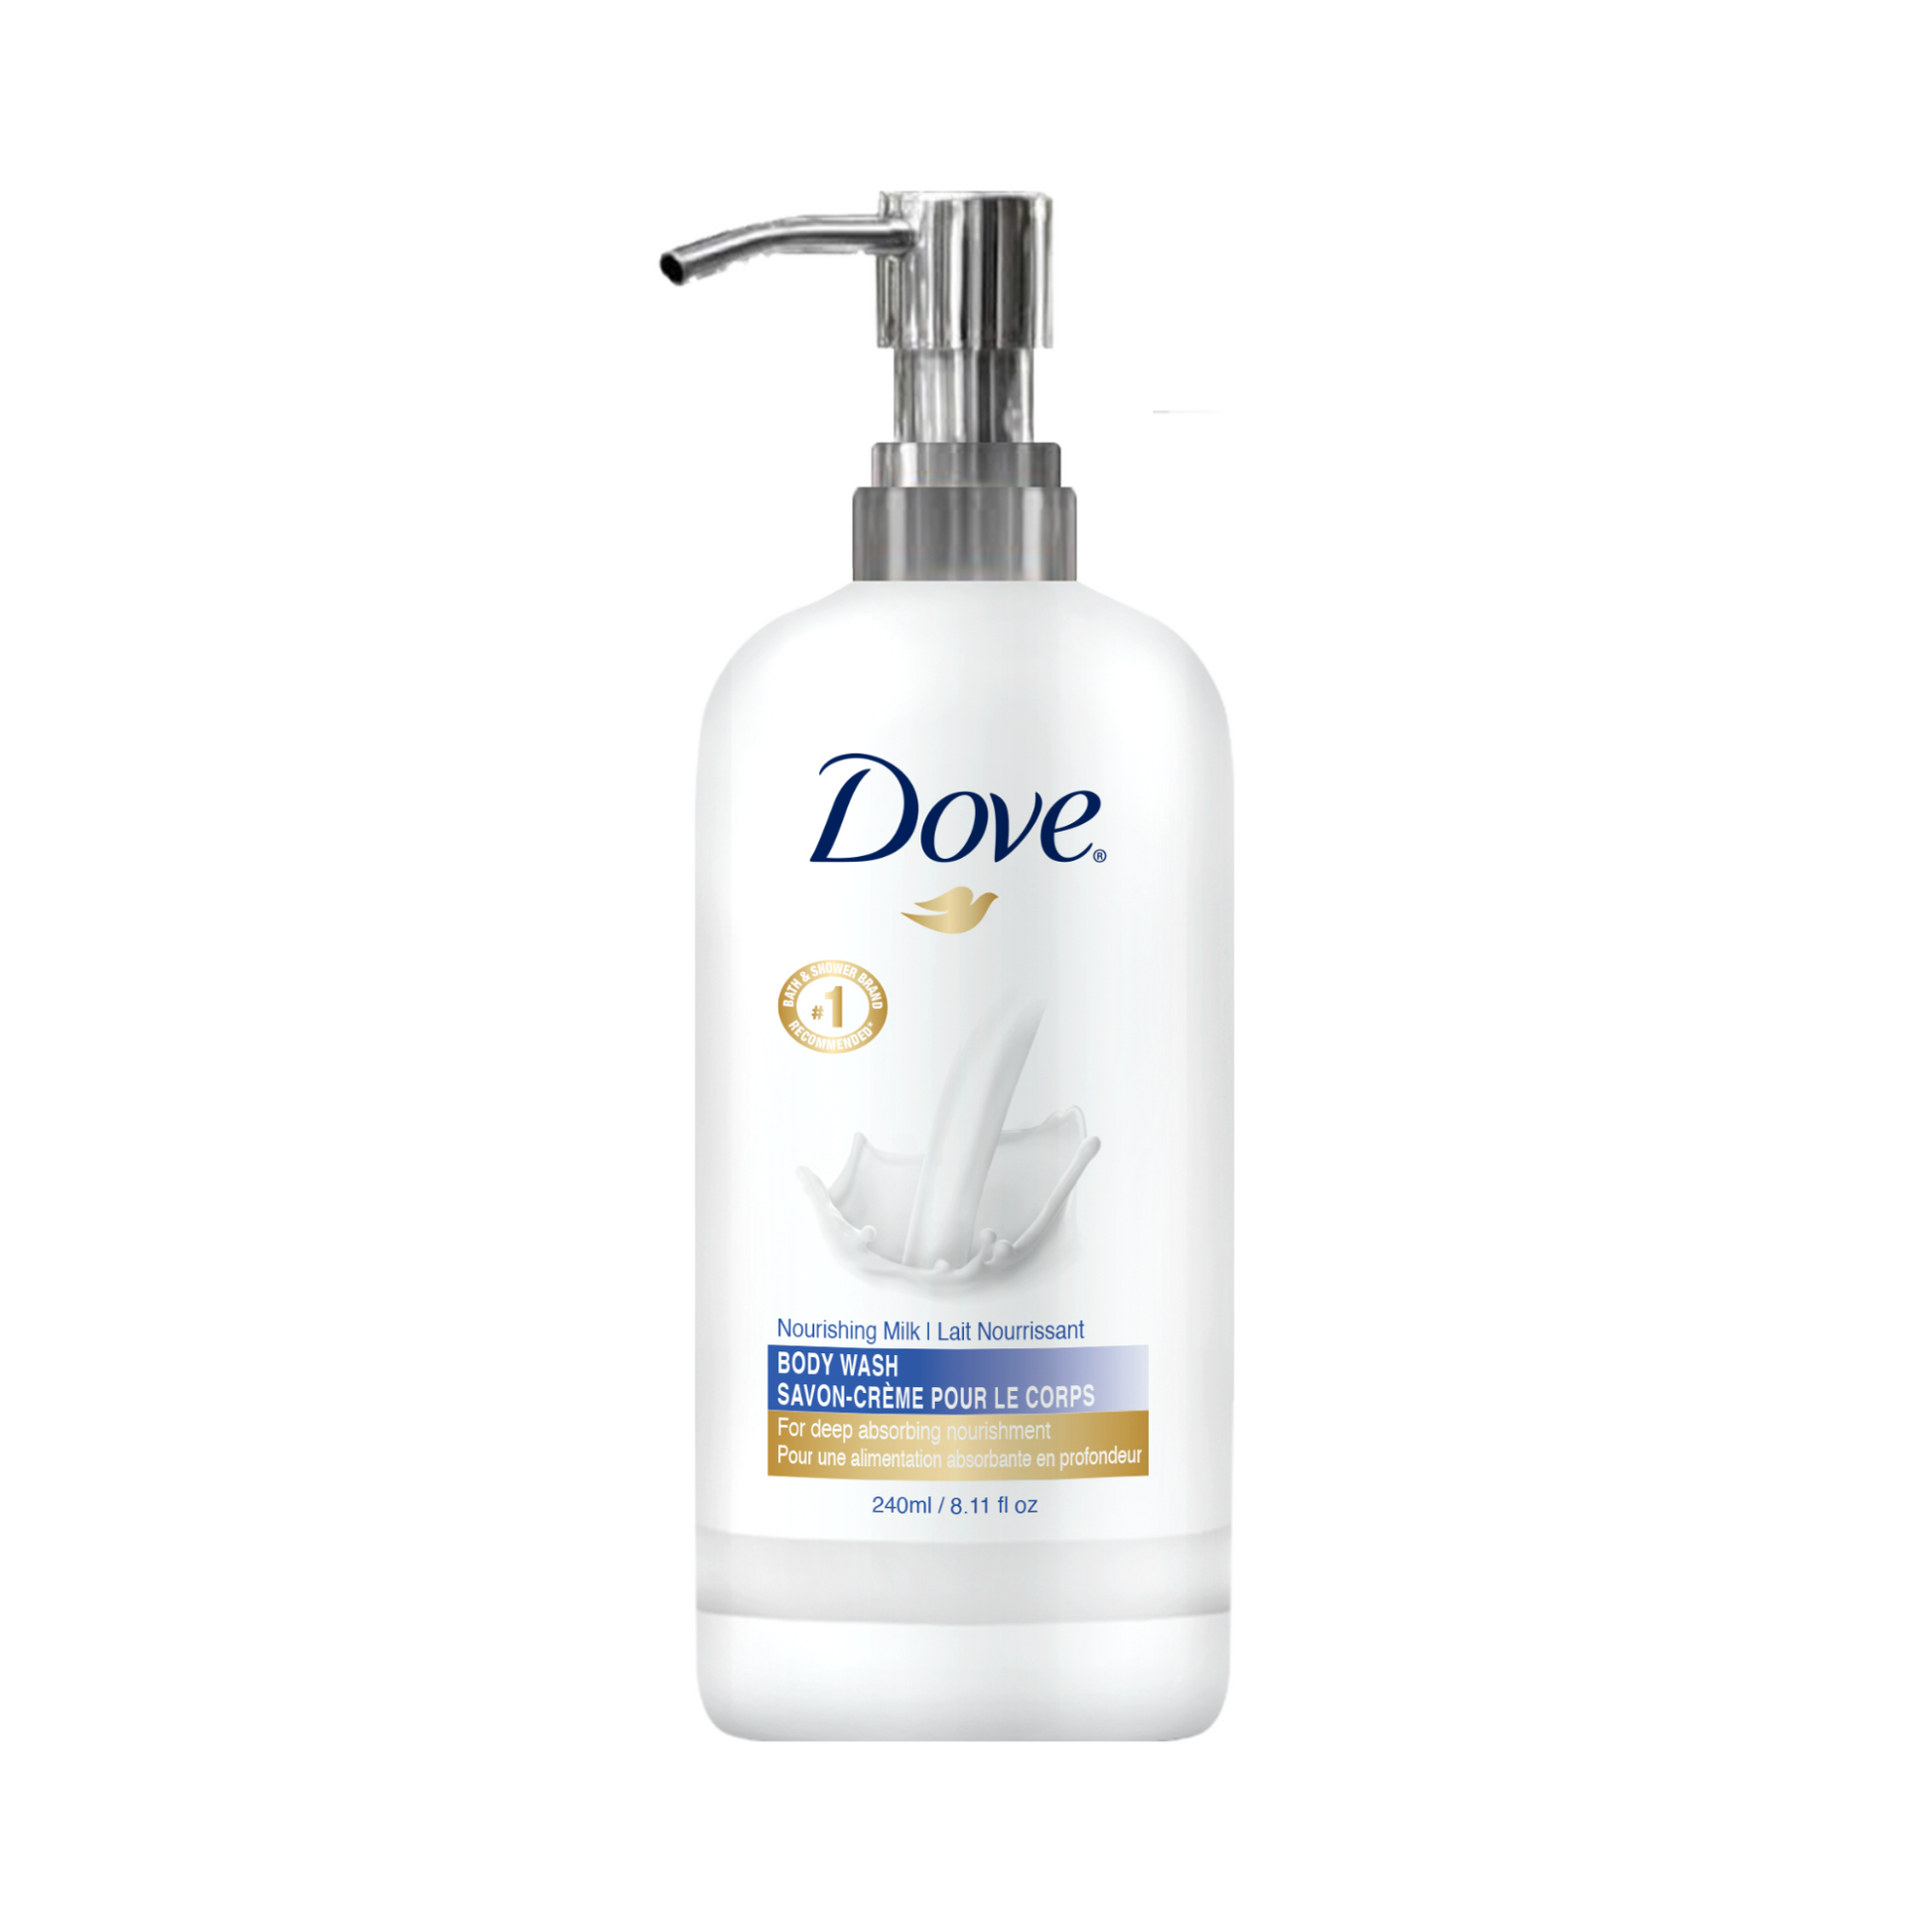 Dove Nourishing Milk Body Wash Bottle - 240ml